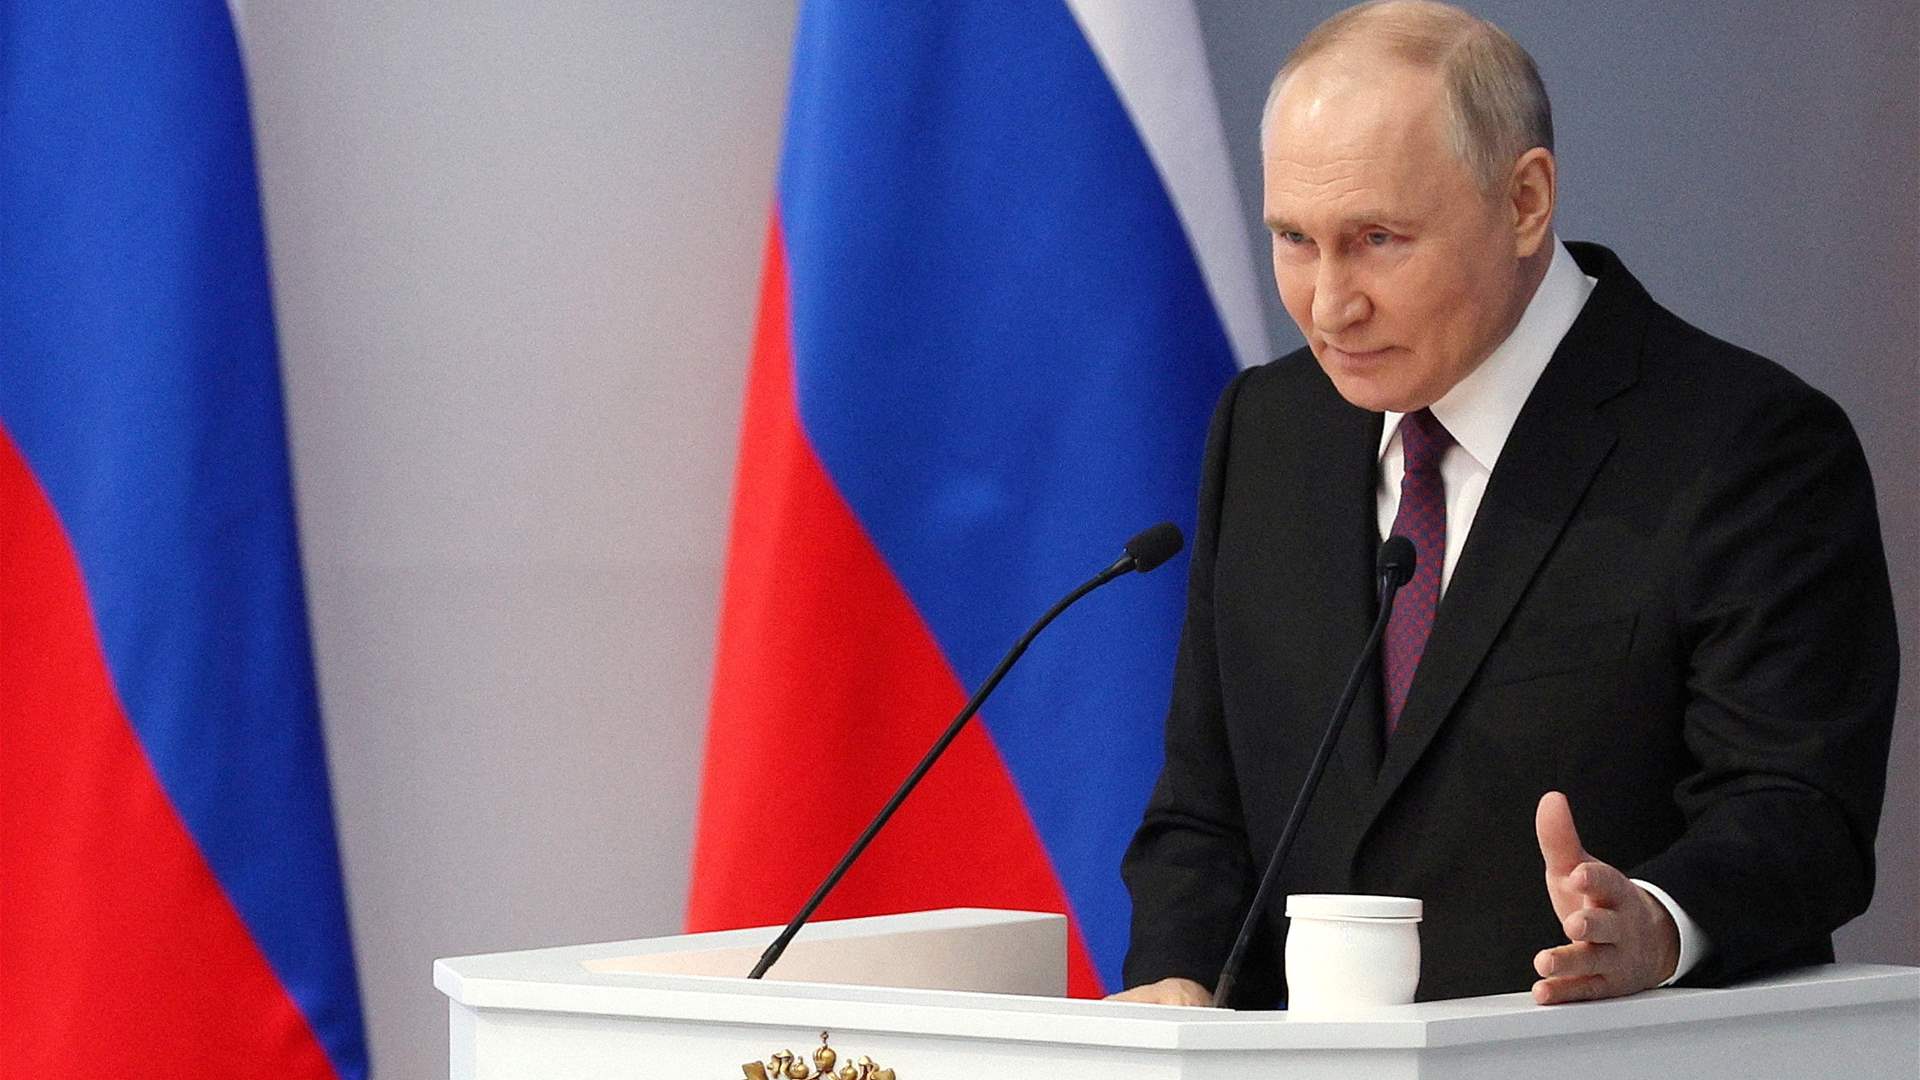 Putin pledges over $126 billion in public spending as election looms